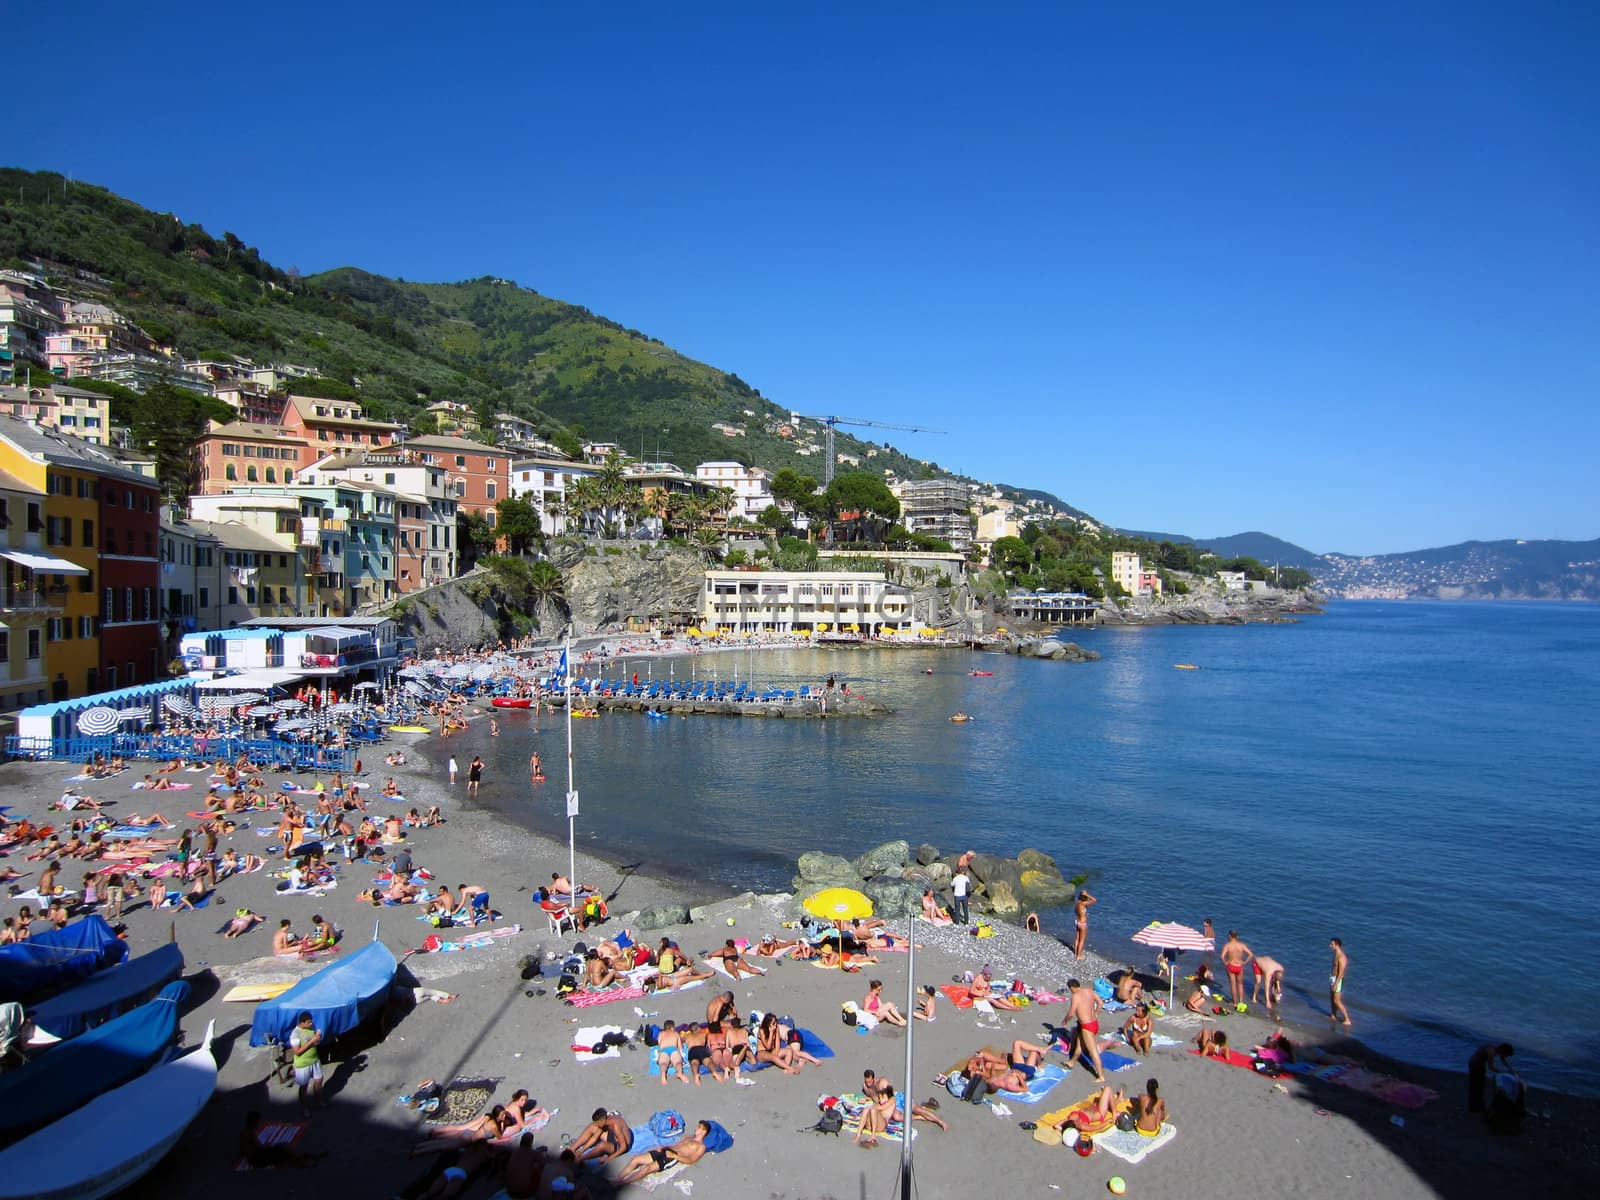 Bogliasco in Liguria  on Italian Coast